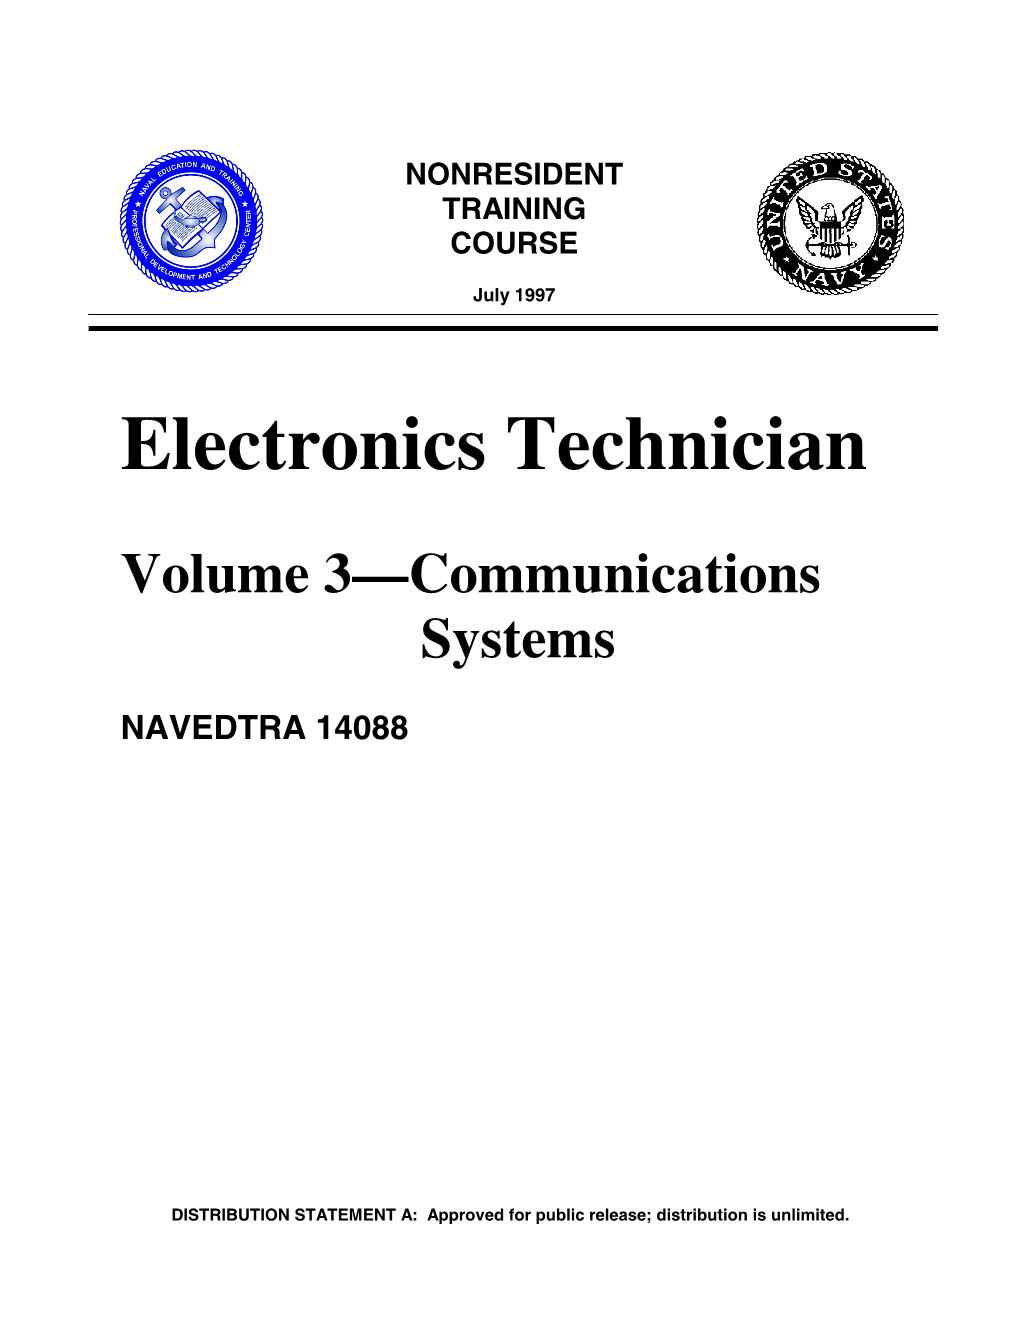 Electronics Technician Vol 3